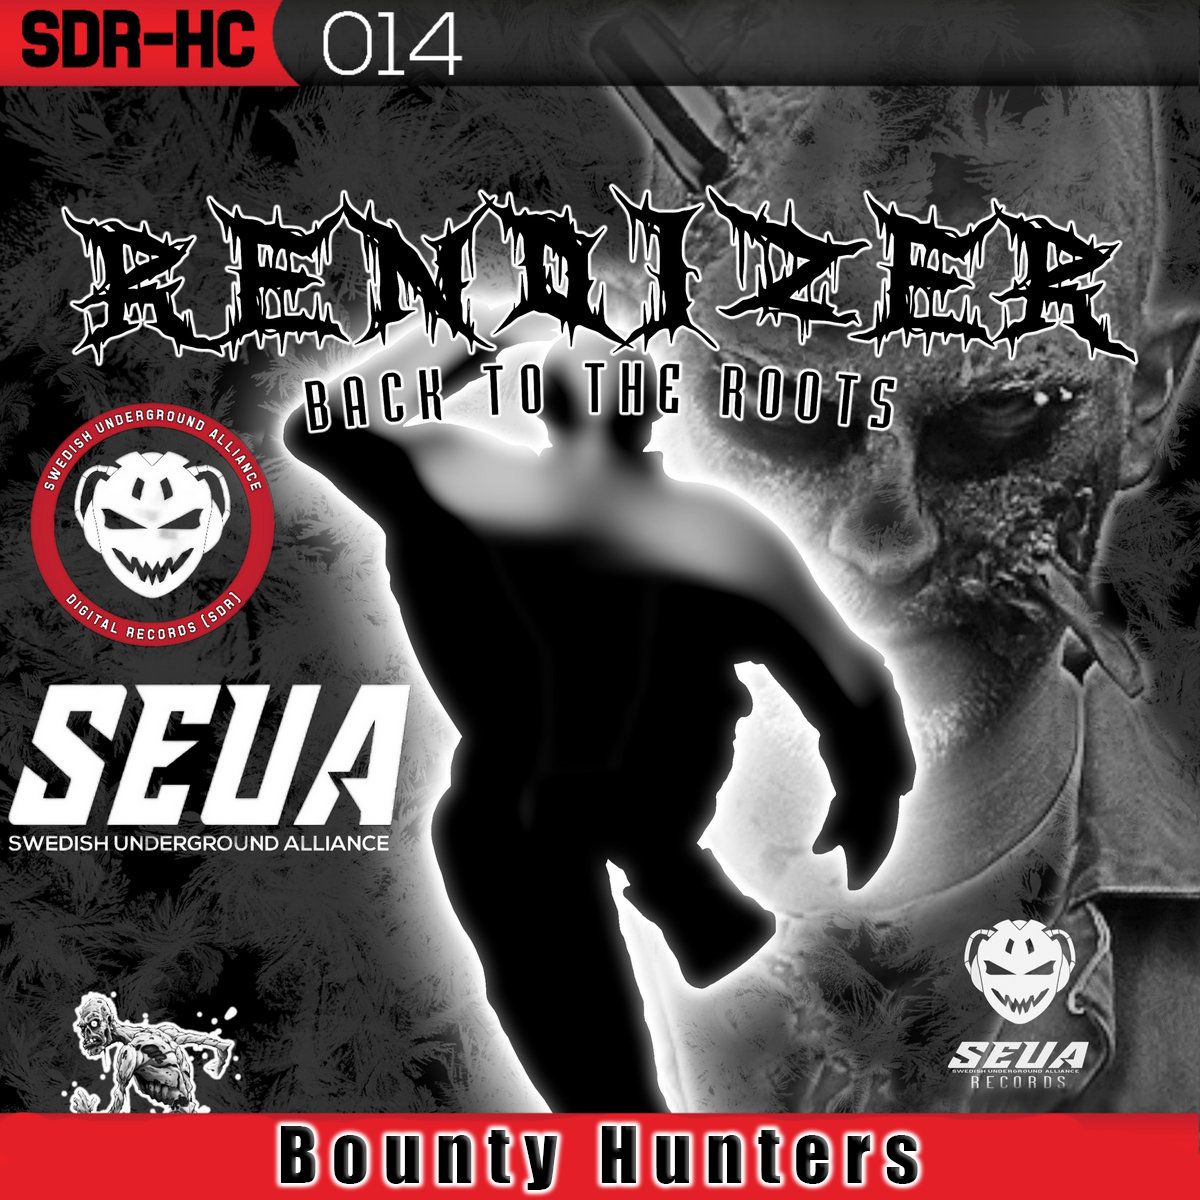 track ... Re-noiZer ... Bounty Hunters